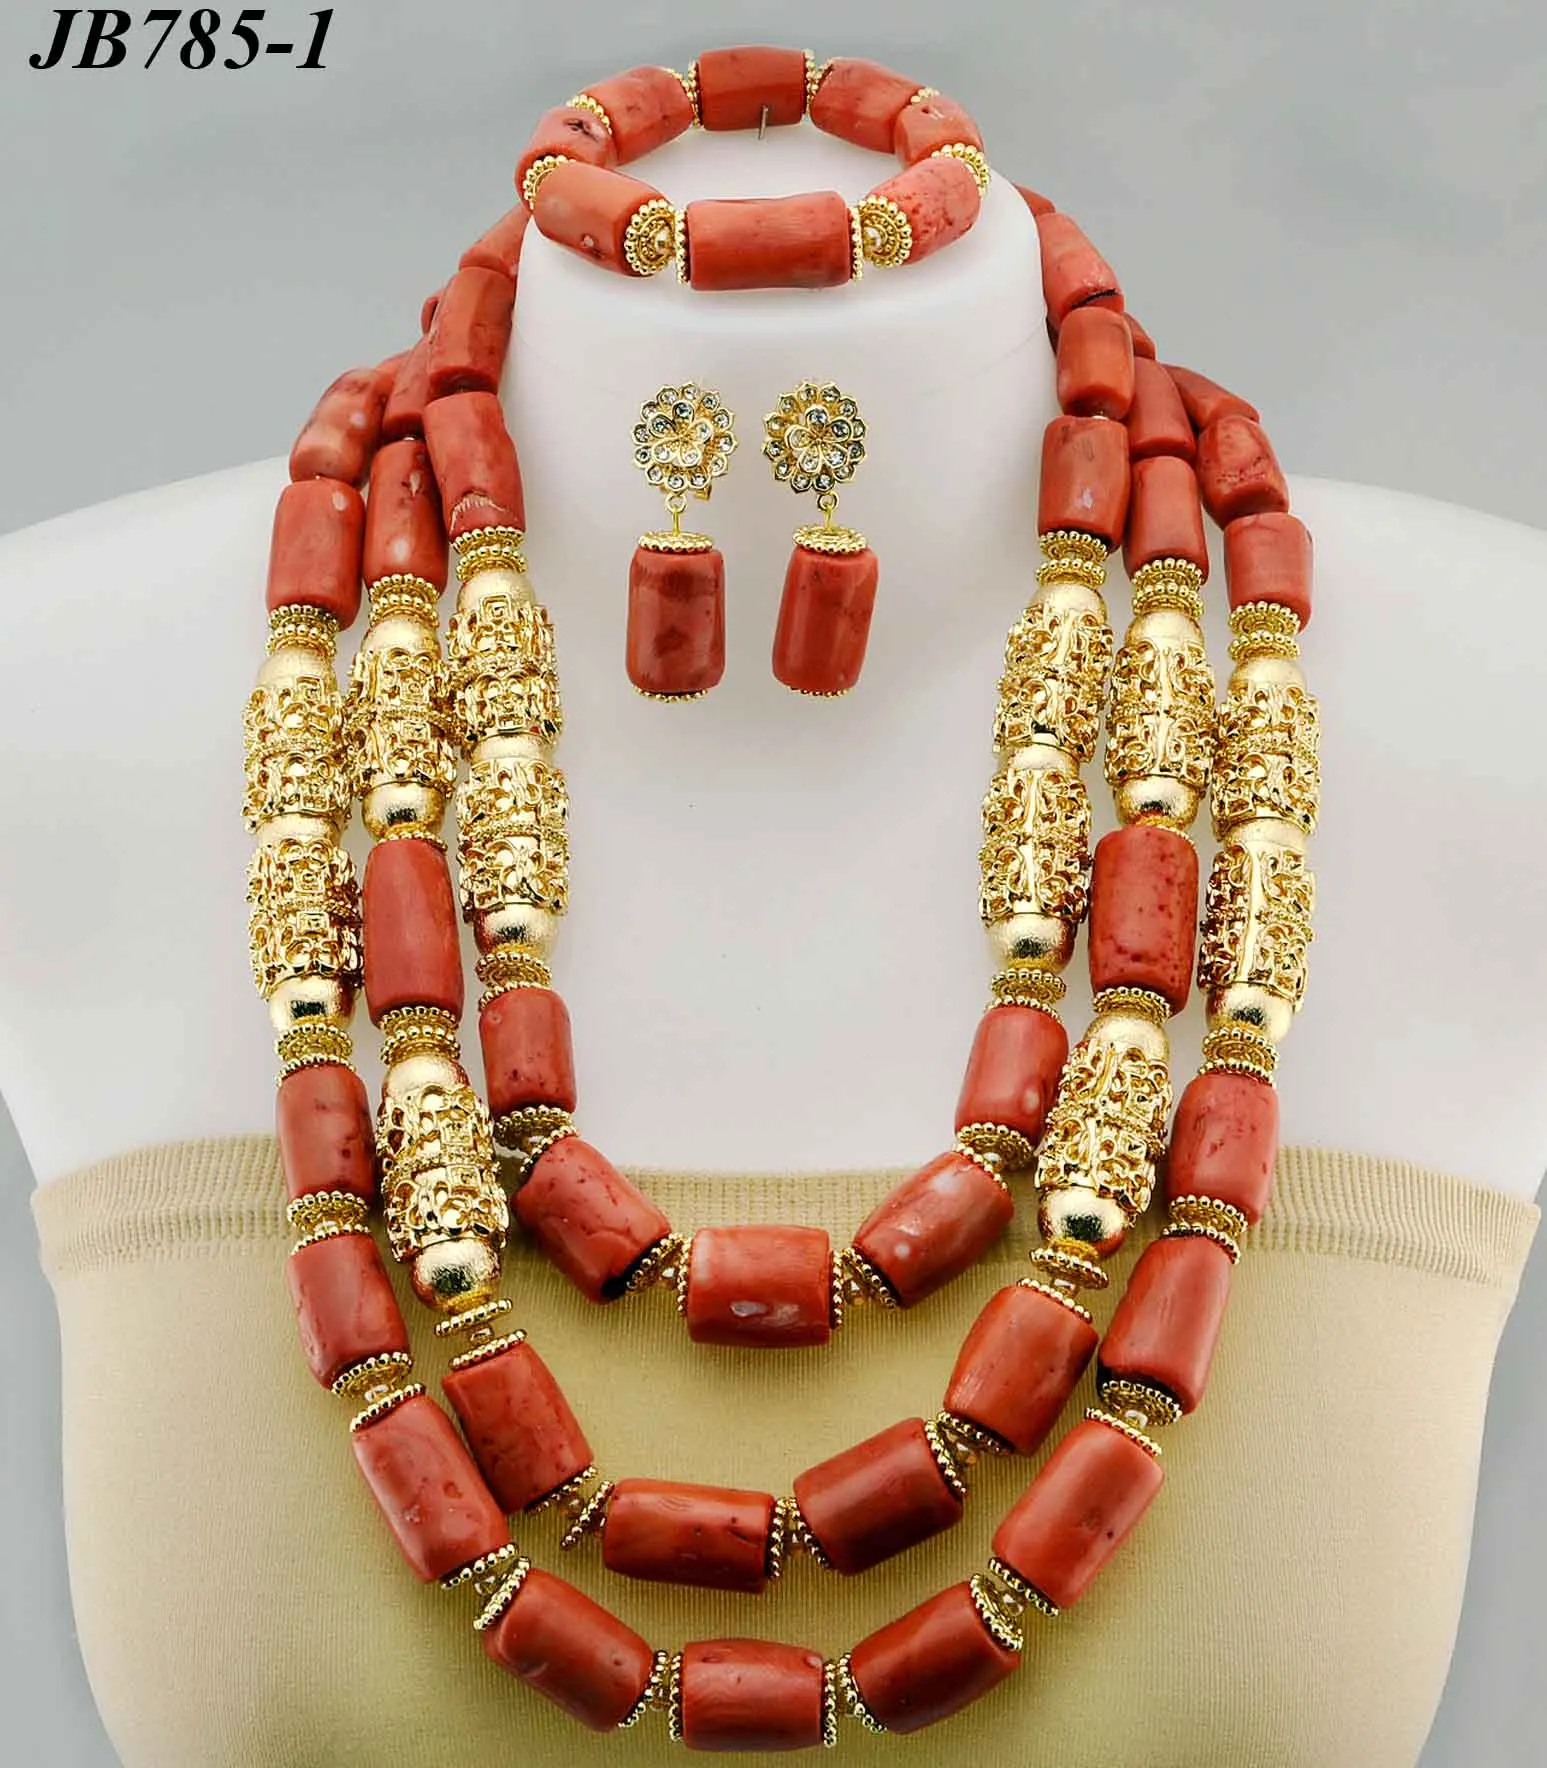 Coral beads Mediterranean jewelry